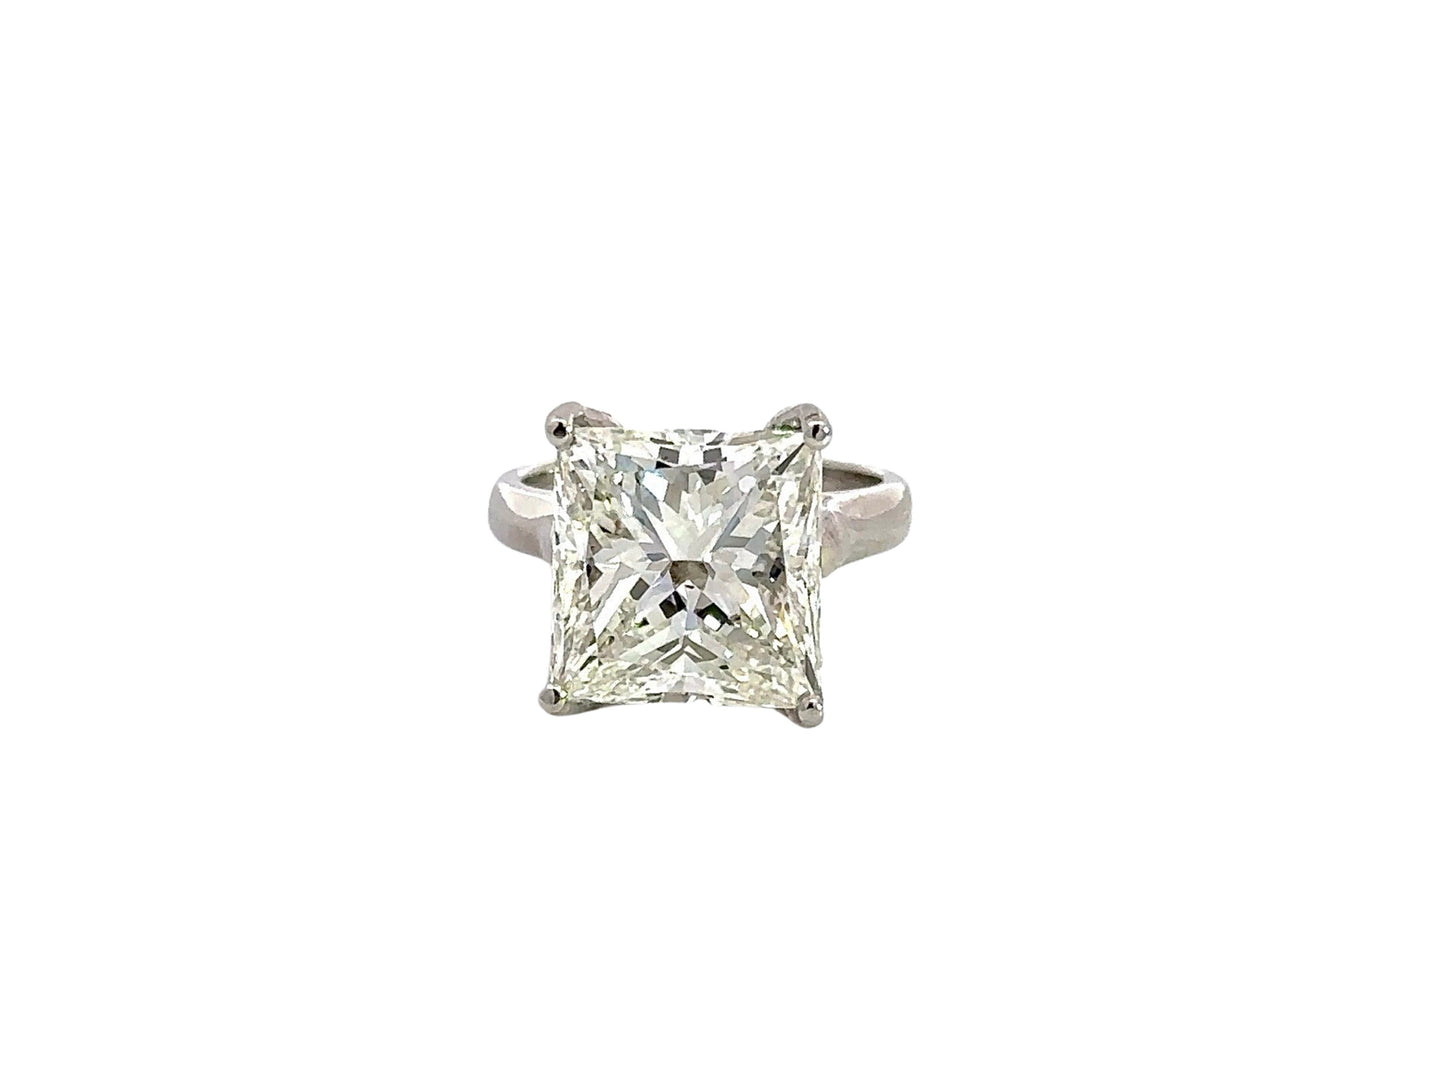 Top of 5.04 carat princess-cut diamond ring in platinum